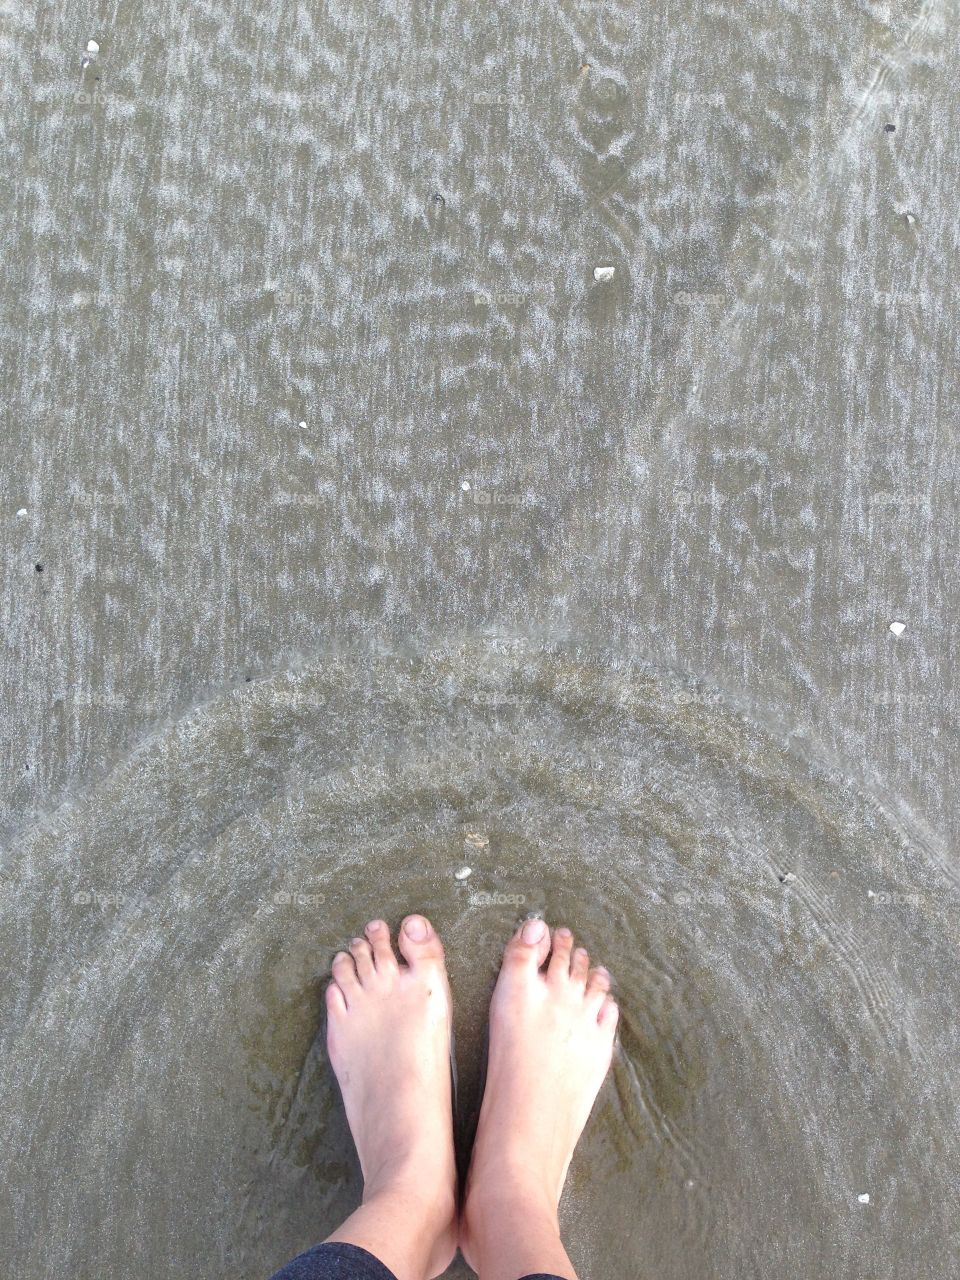 Sand of Long Beach